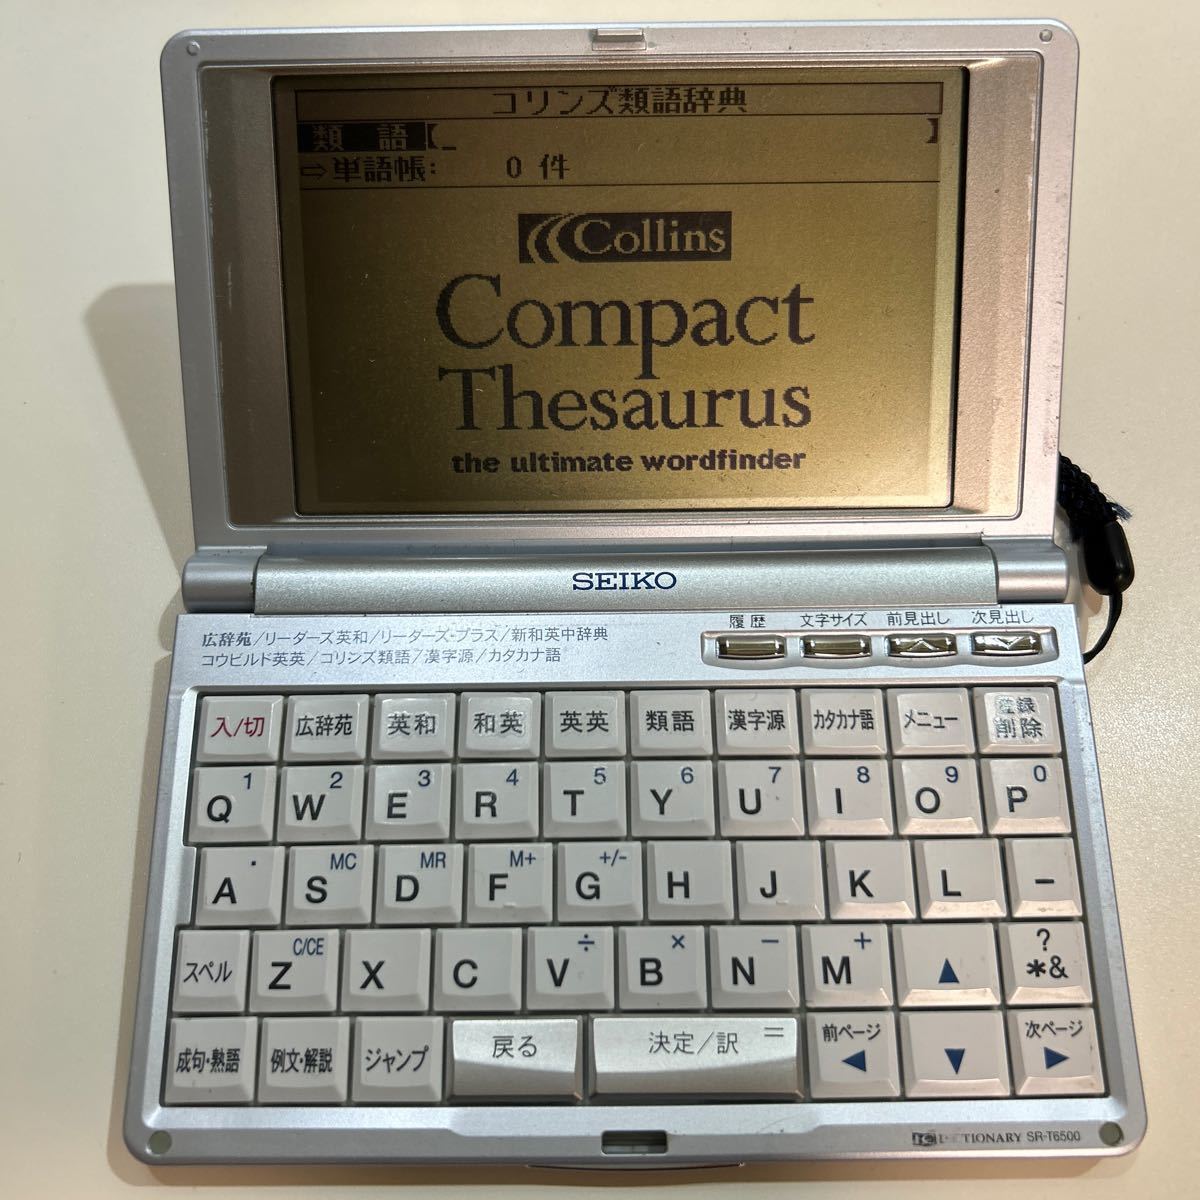 *SEIKO SR-T6500 computerized dictionary 